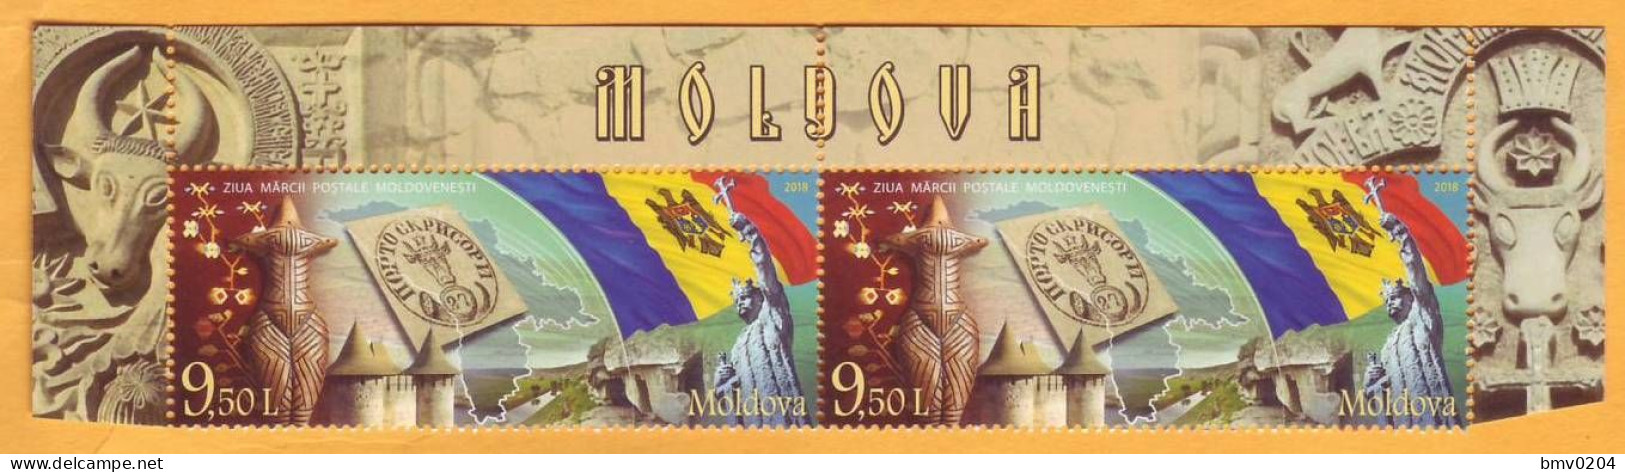 2018 Moldova Moldavie Moldau "Moldovan Postmark Day". Romania  2 Stamps Mint - Tag Der Briefmarke